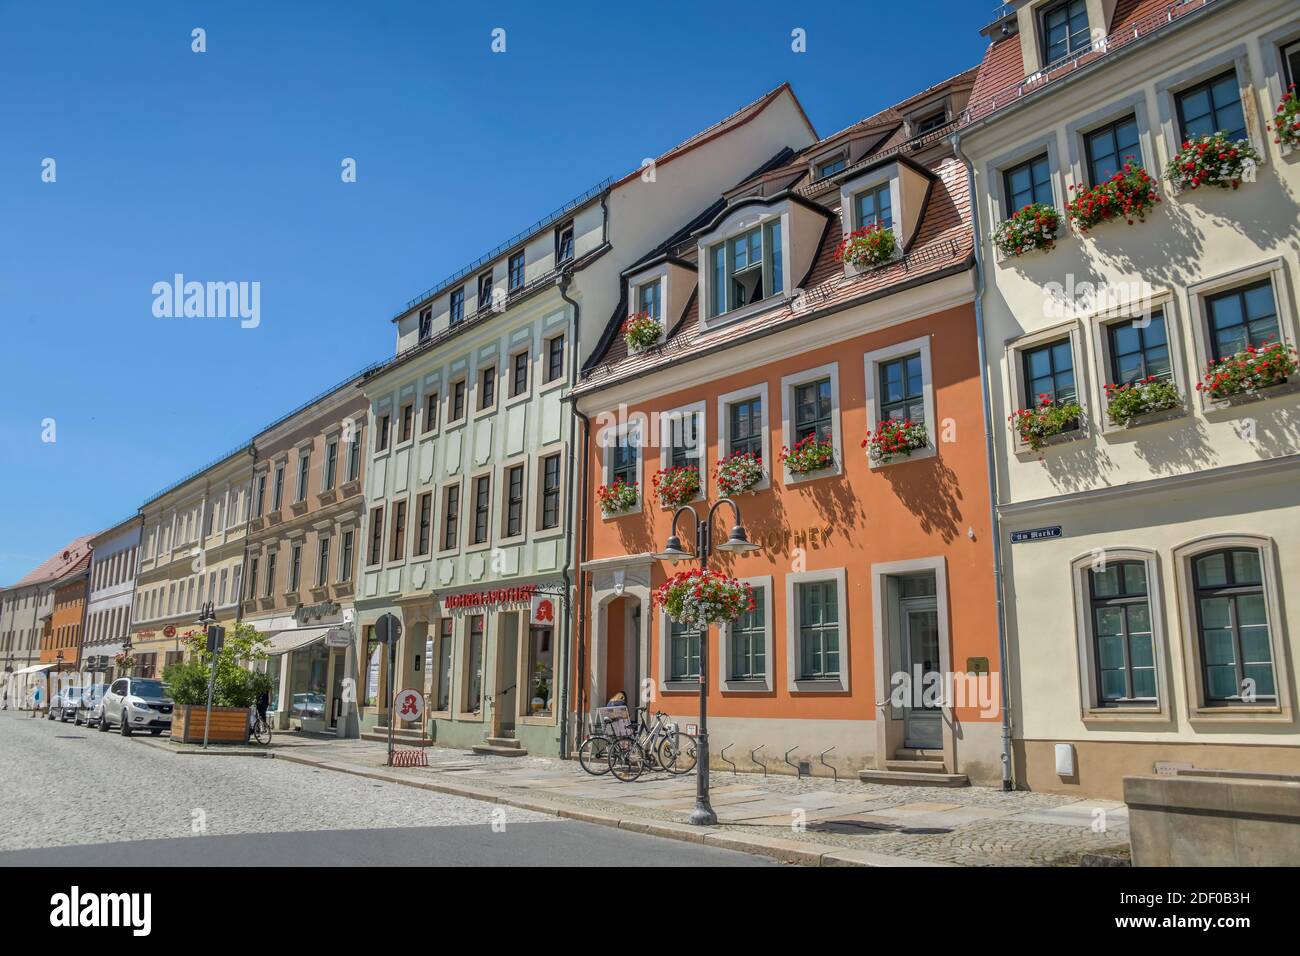 Altbauten, Hauptstraße, Radeberg, Sachsen, Deutschland Foto Stock